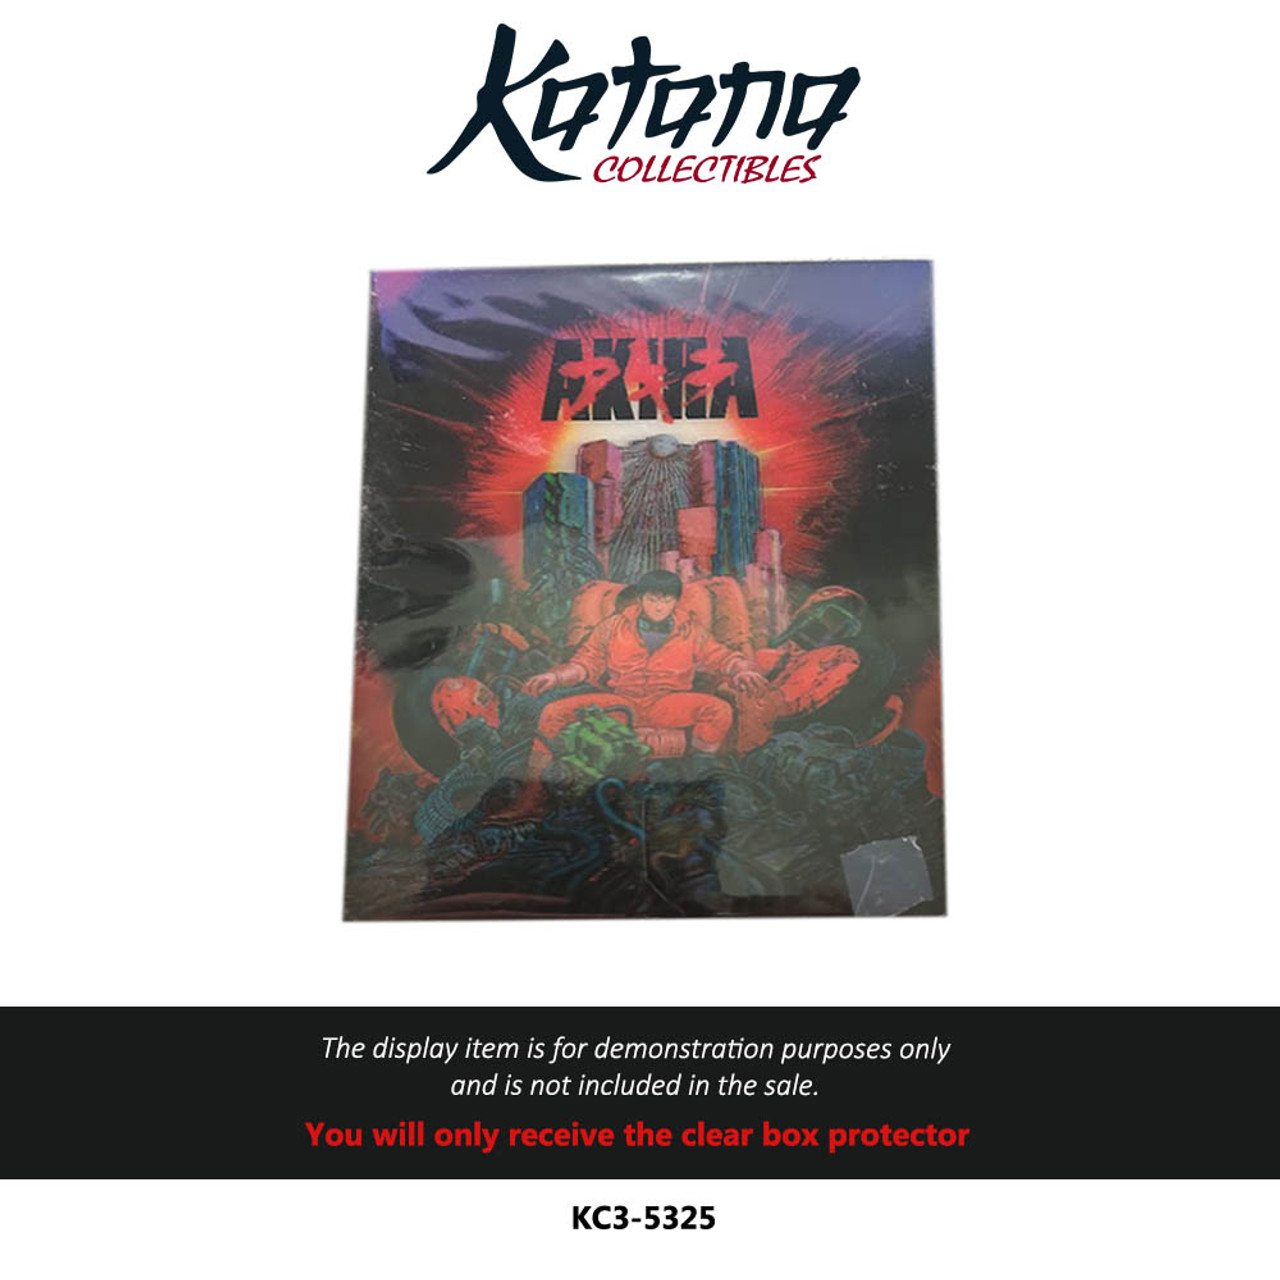 Katana Collectibles Protector For Akira (Korean vision) Bluray Steelbook with book